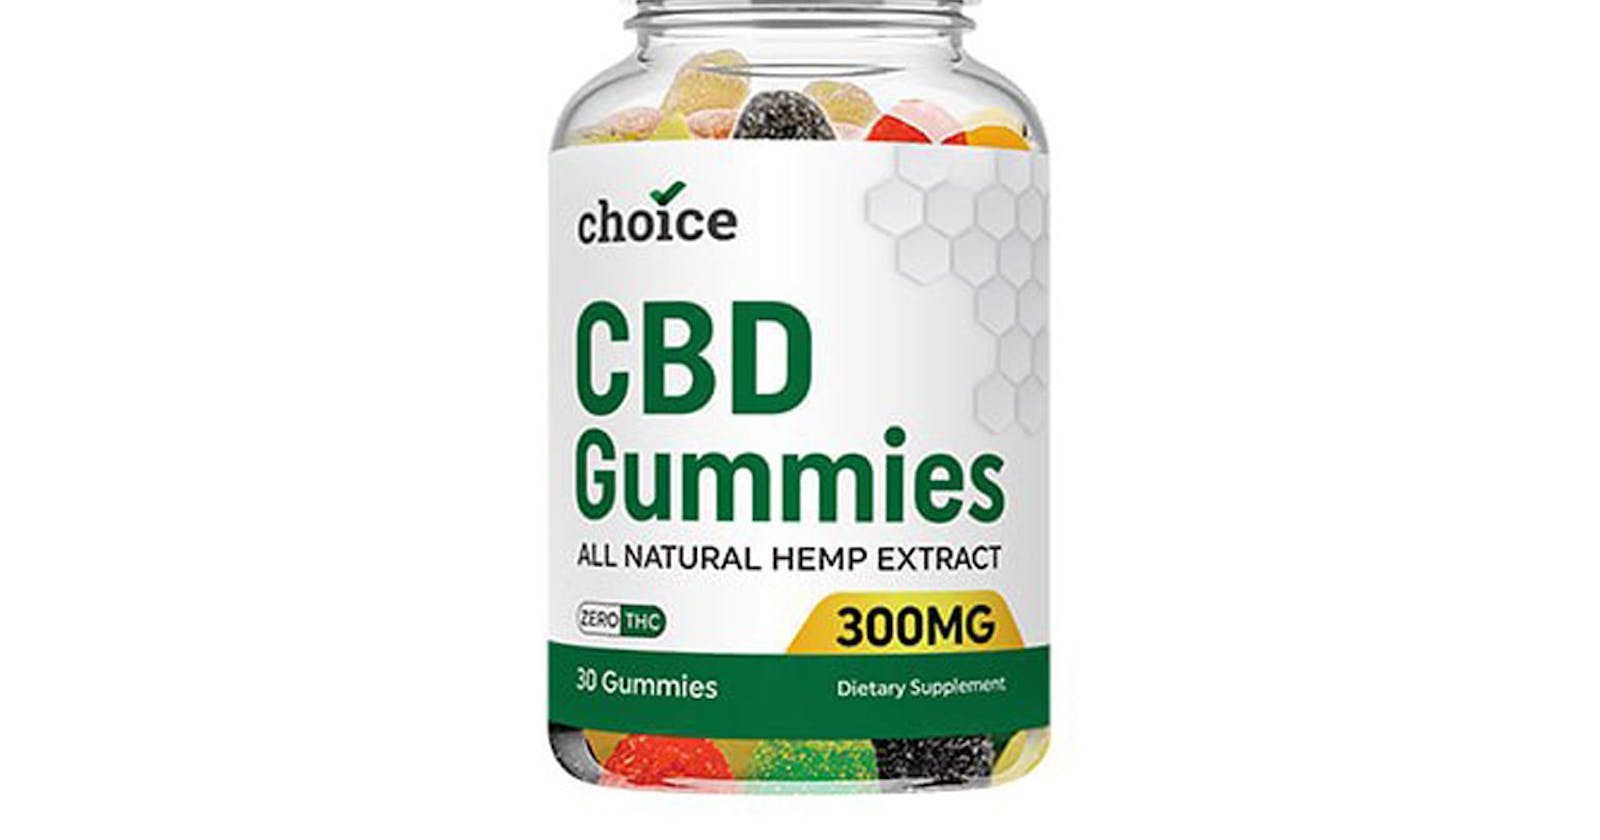 Choice CBD Gummies For ED - Enjoy More Stamina Like Never Before!